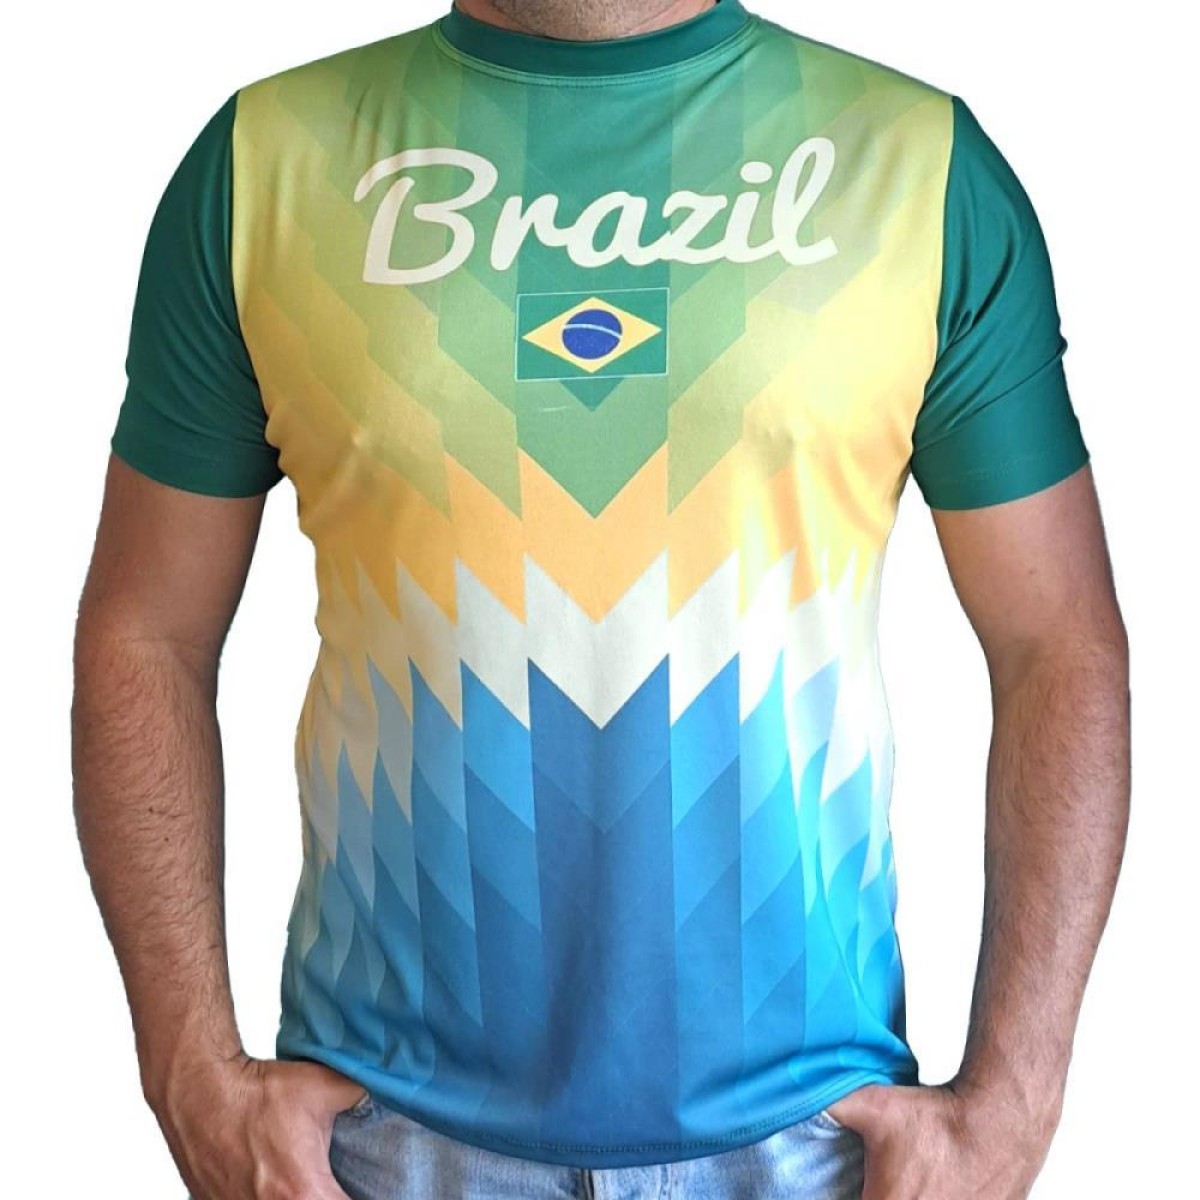 Camiseta Da Copa Do Mundo Camiseta Brasil Verde P